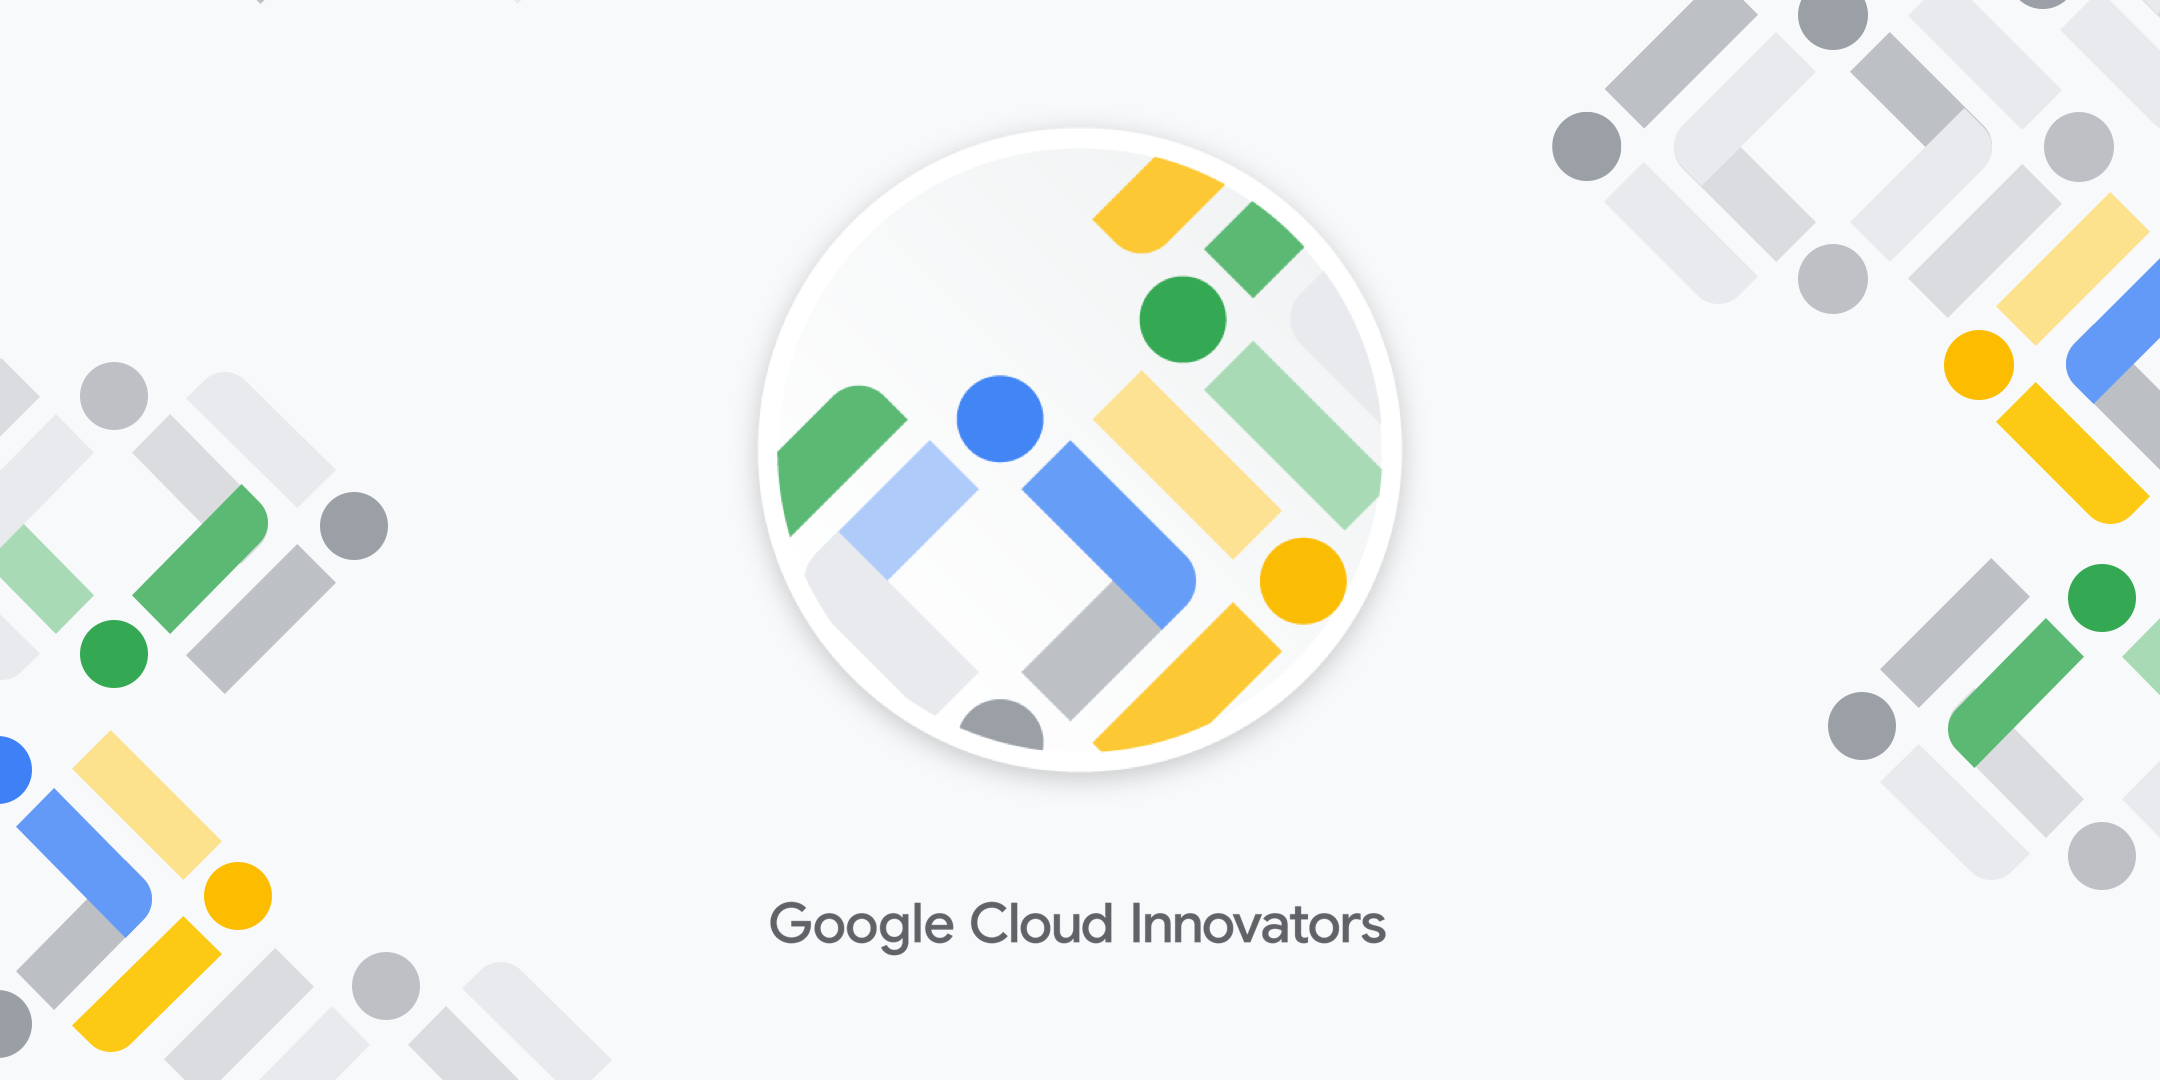 Discord AppSheet para brasileiros! - Google Cloud Community